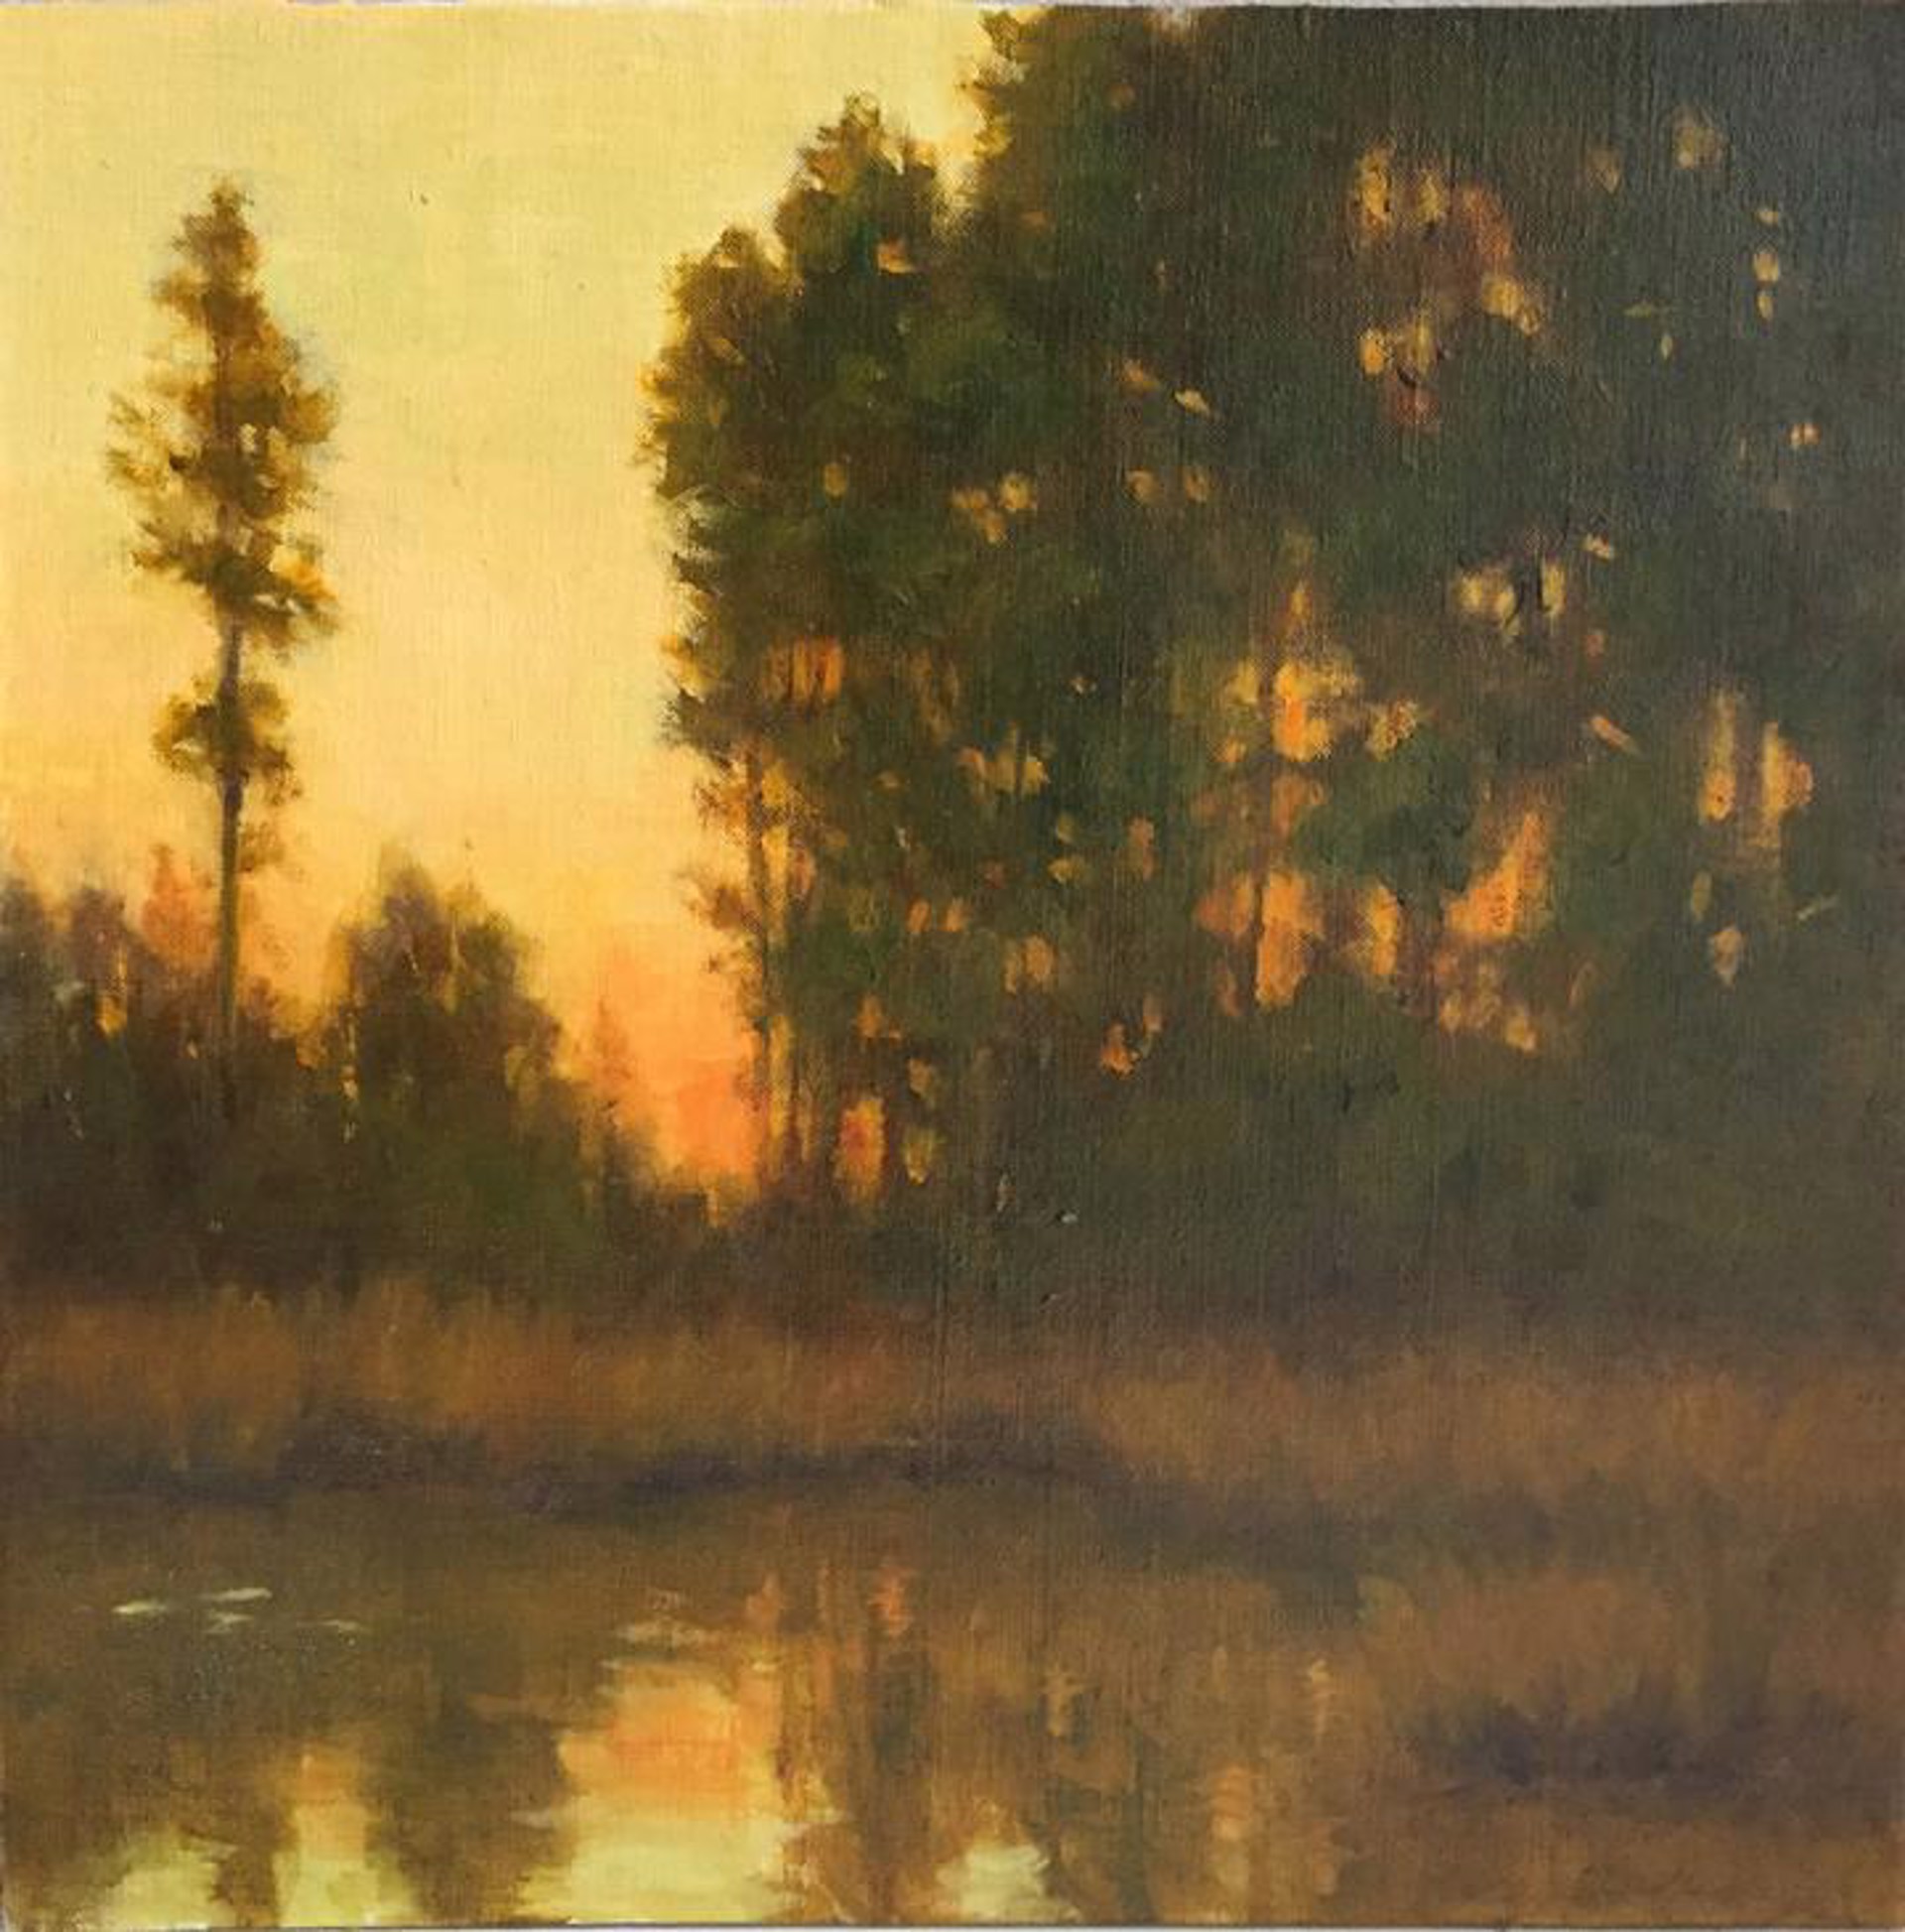 Piney Woods Evening by Deborah Paris